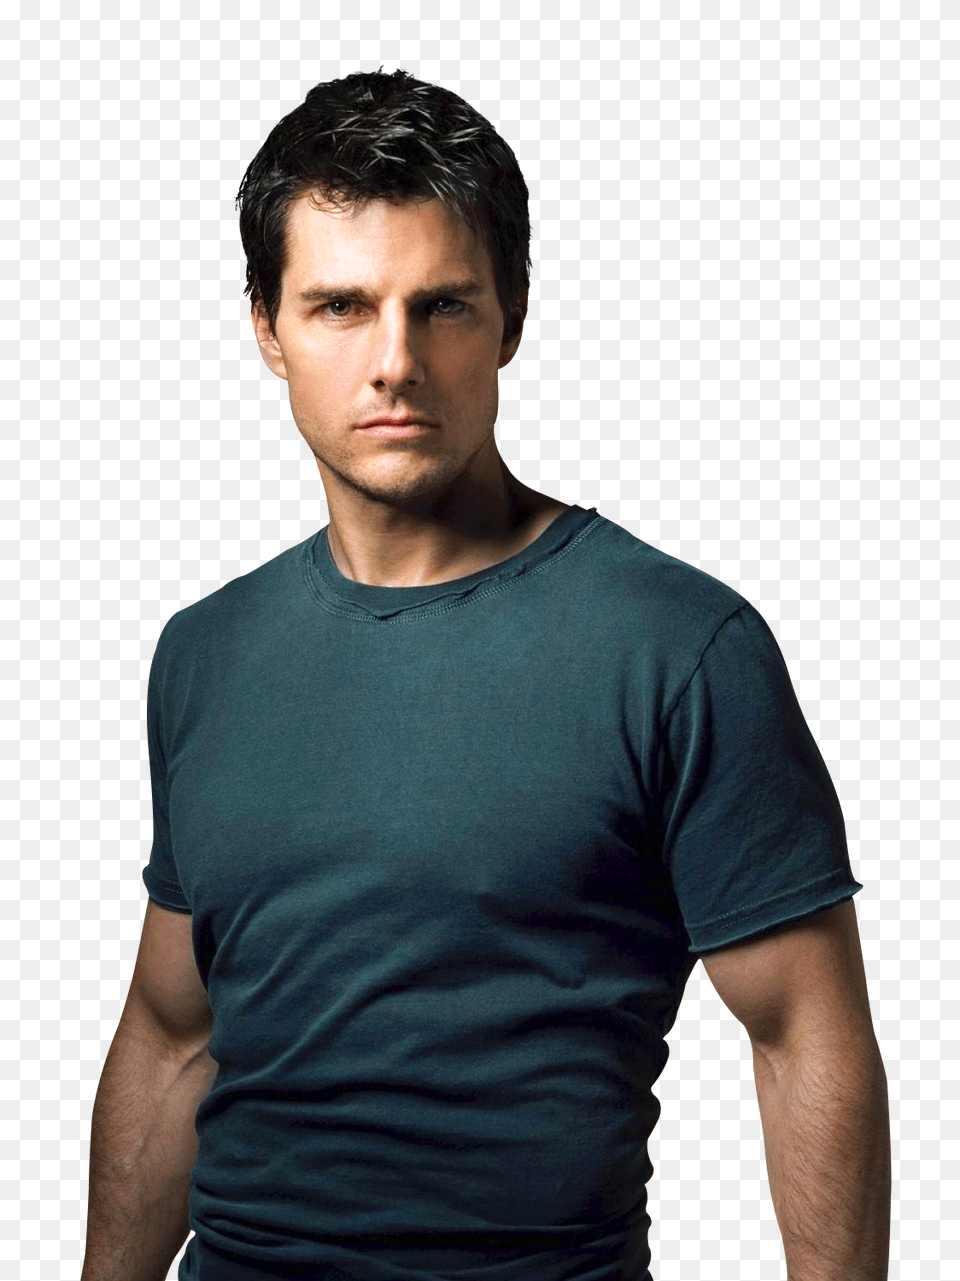 Pngpix Com Tom Cruise Image, T-shirt, Clothing, Person, Man Free Transparent Png